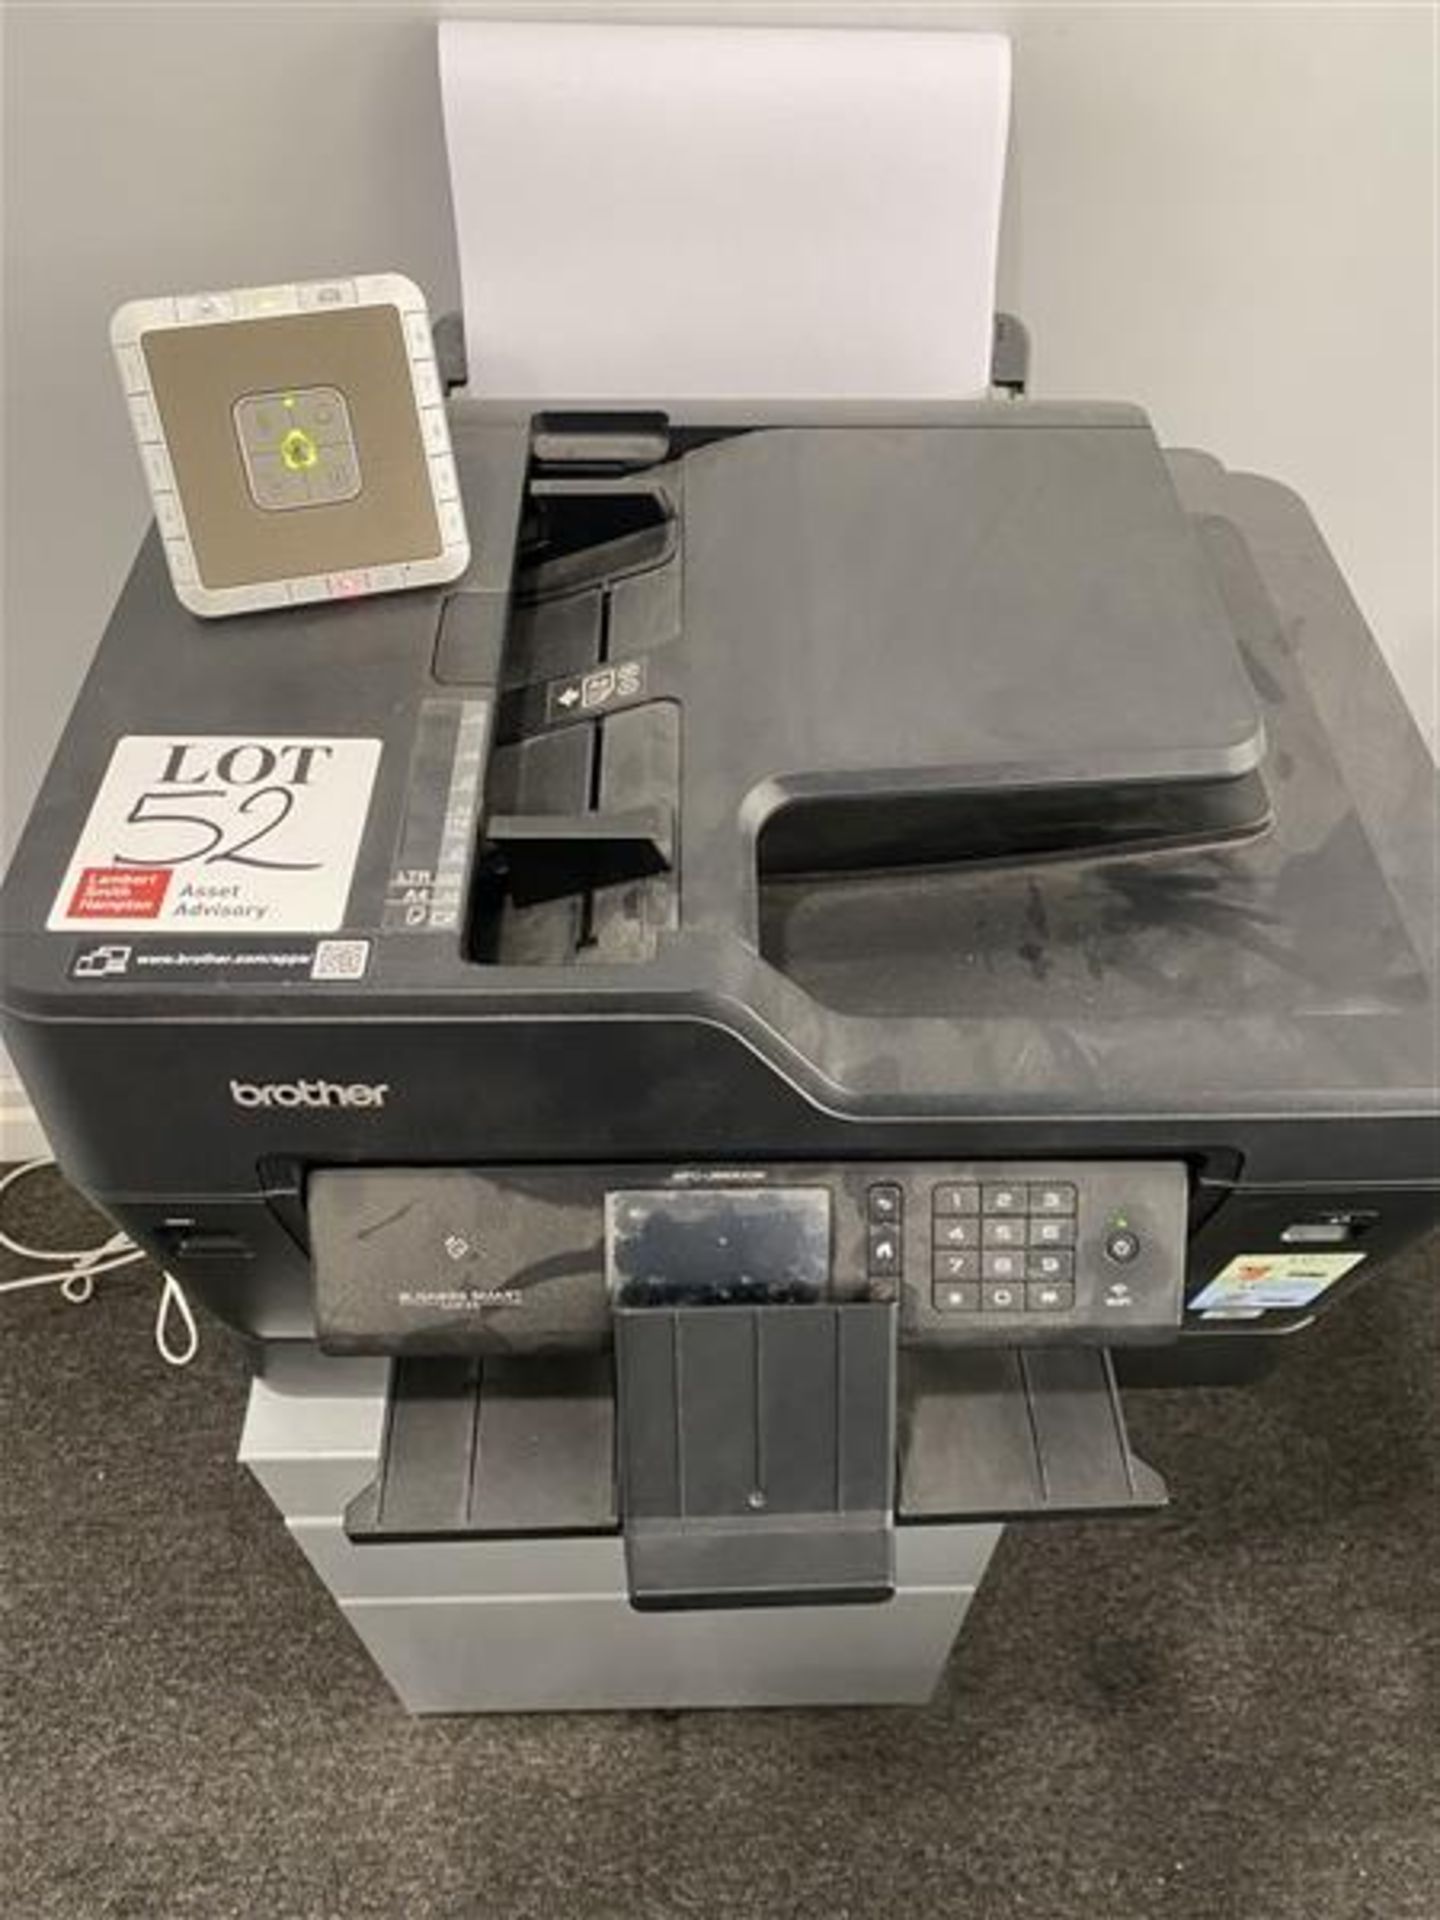 Brother MFC-J6930DW printer and a Fellowes 60CS shredder